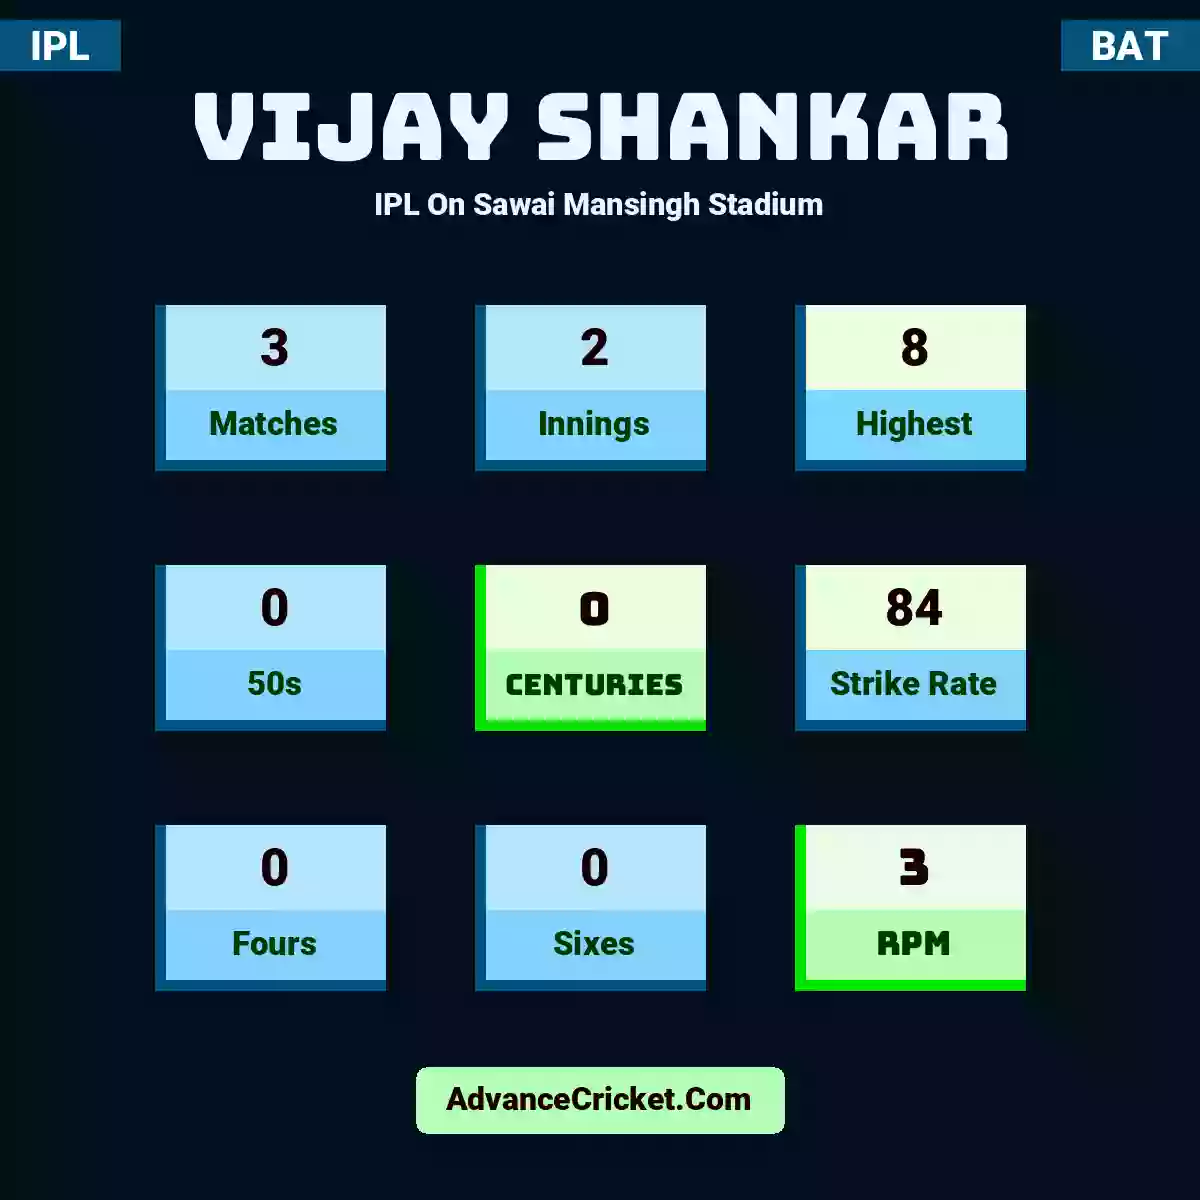 Vijay Shankar IPL  On Sawai Mansingh Stadium, Vijay Shankar played 3 matches, scored 8 runs as highest, 0 half-centuries, and 0 centuries, with a strike rate of 84. V.Shankar hit 0 fours and 0 sixes, with an RPM of 3.